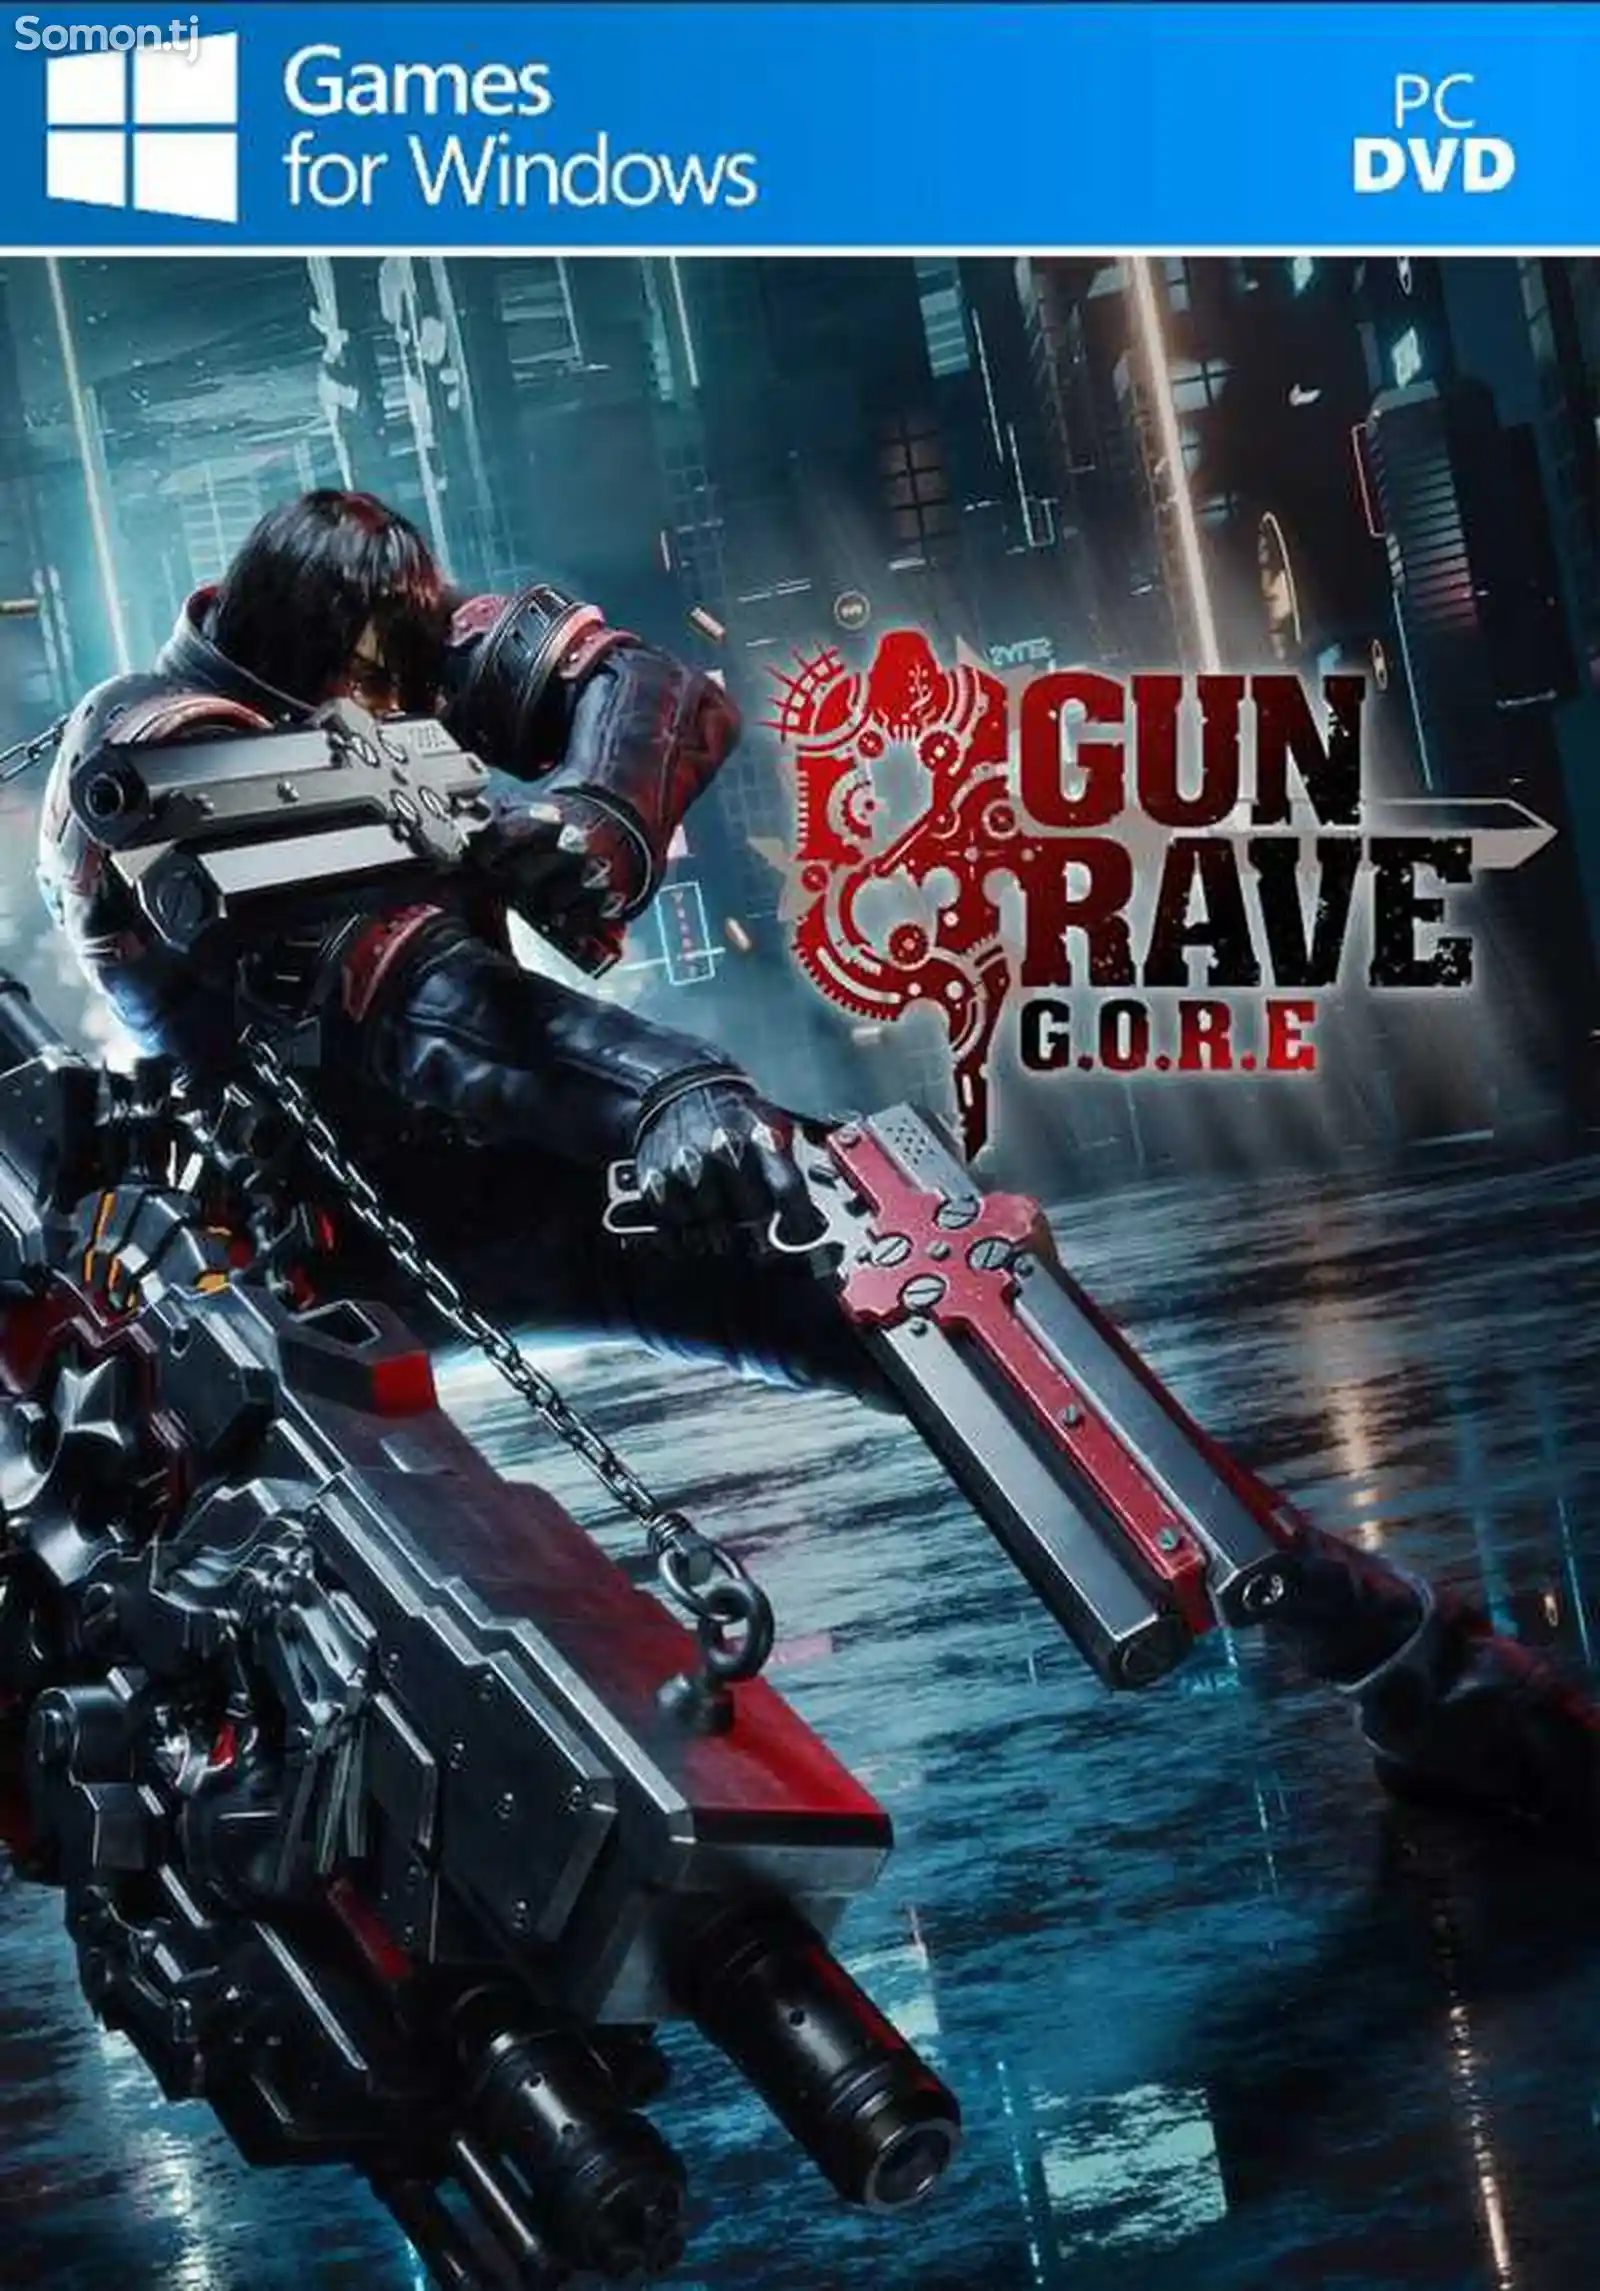 Игра Gungrave g.o.r.e для компьютера-пк-pc-1